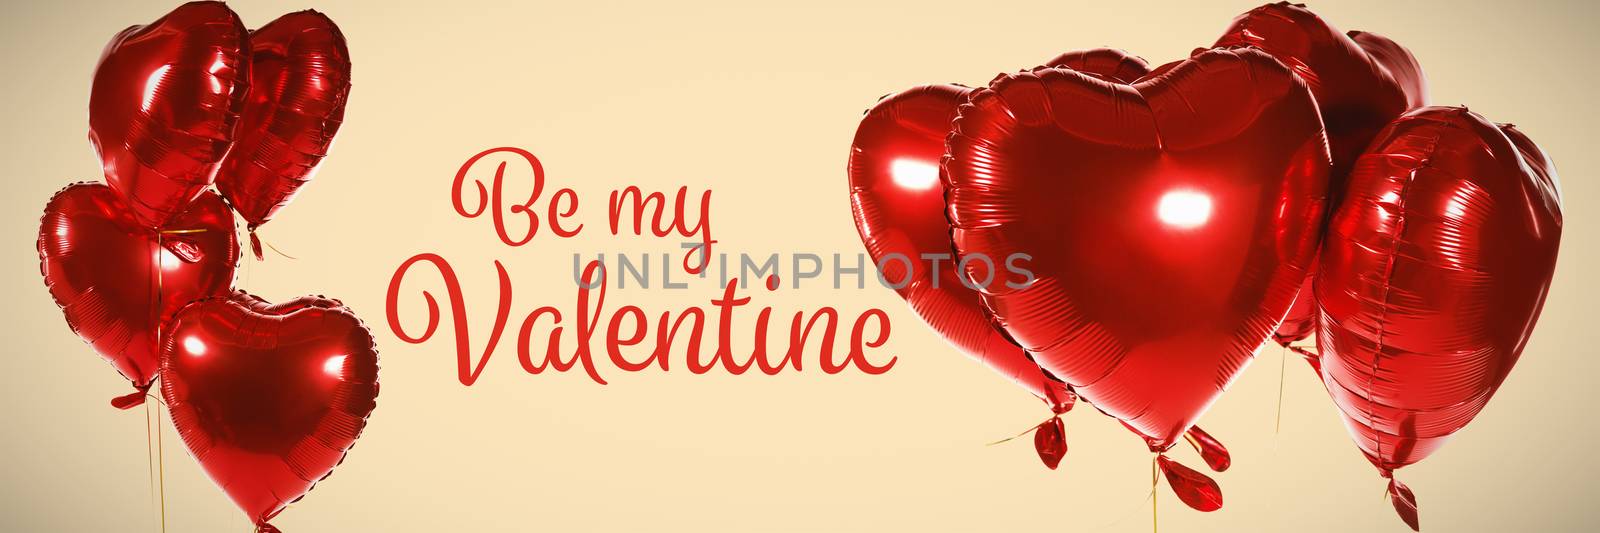 Composite image of be my valentine by Wavebreakmedia